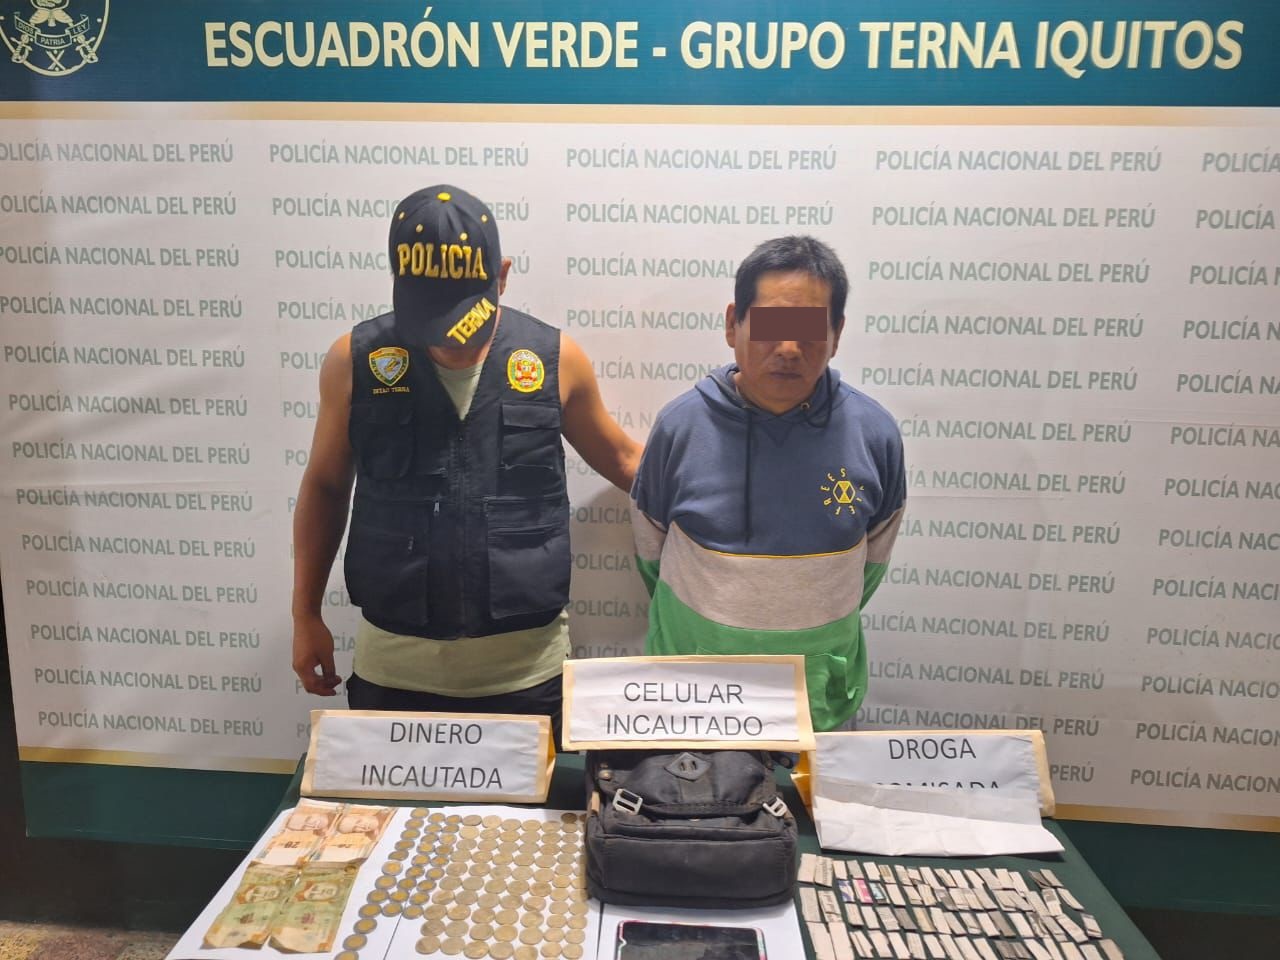 Grupo Terna intervienen a sujeto involucrado en tráfico ilícito de drogas.